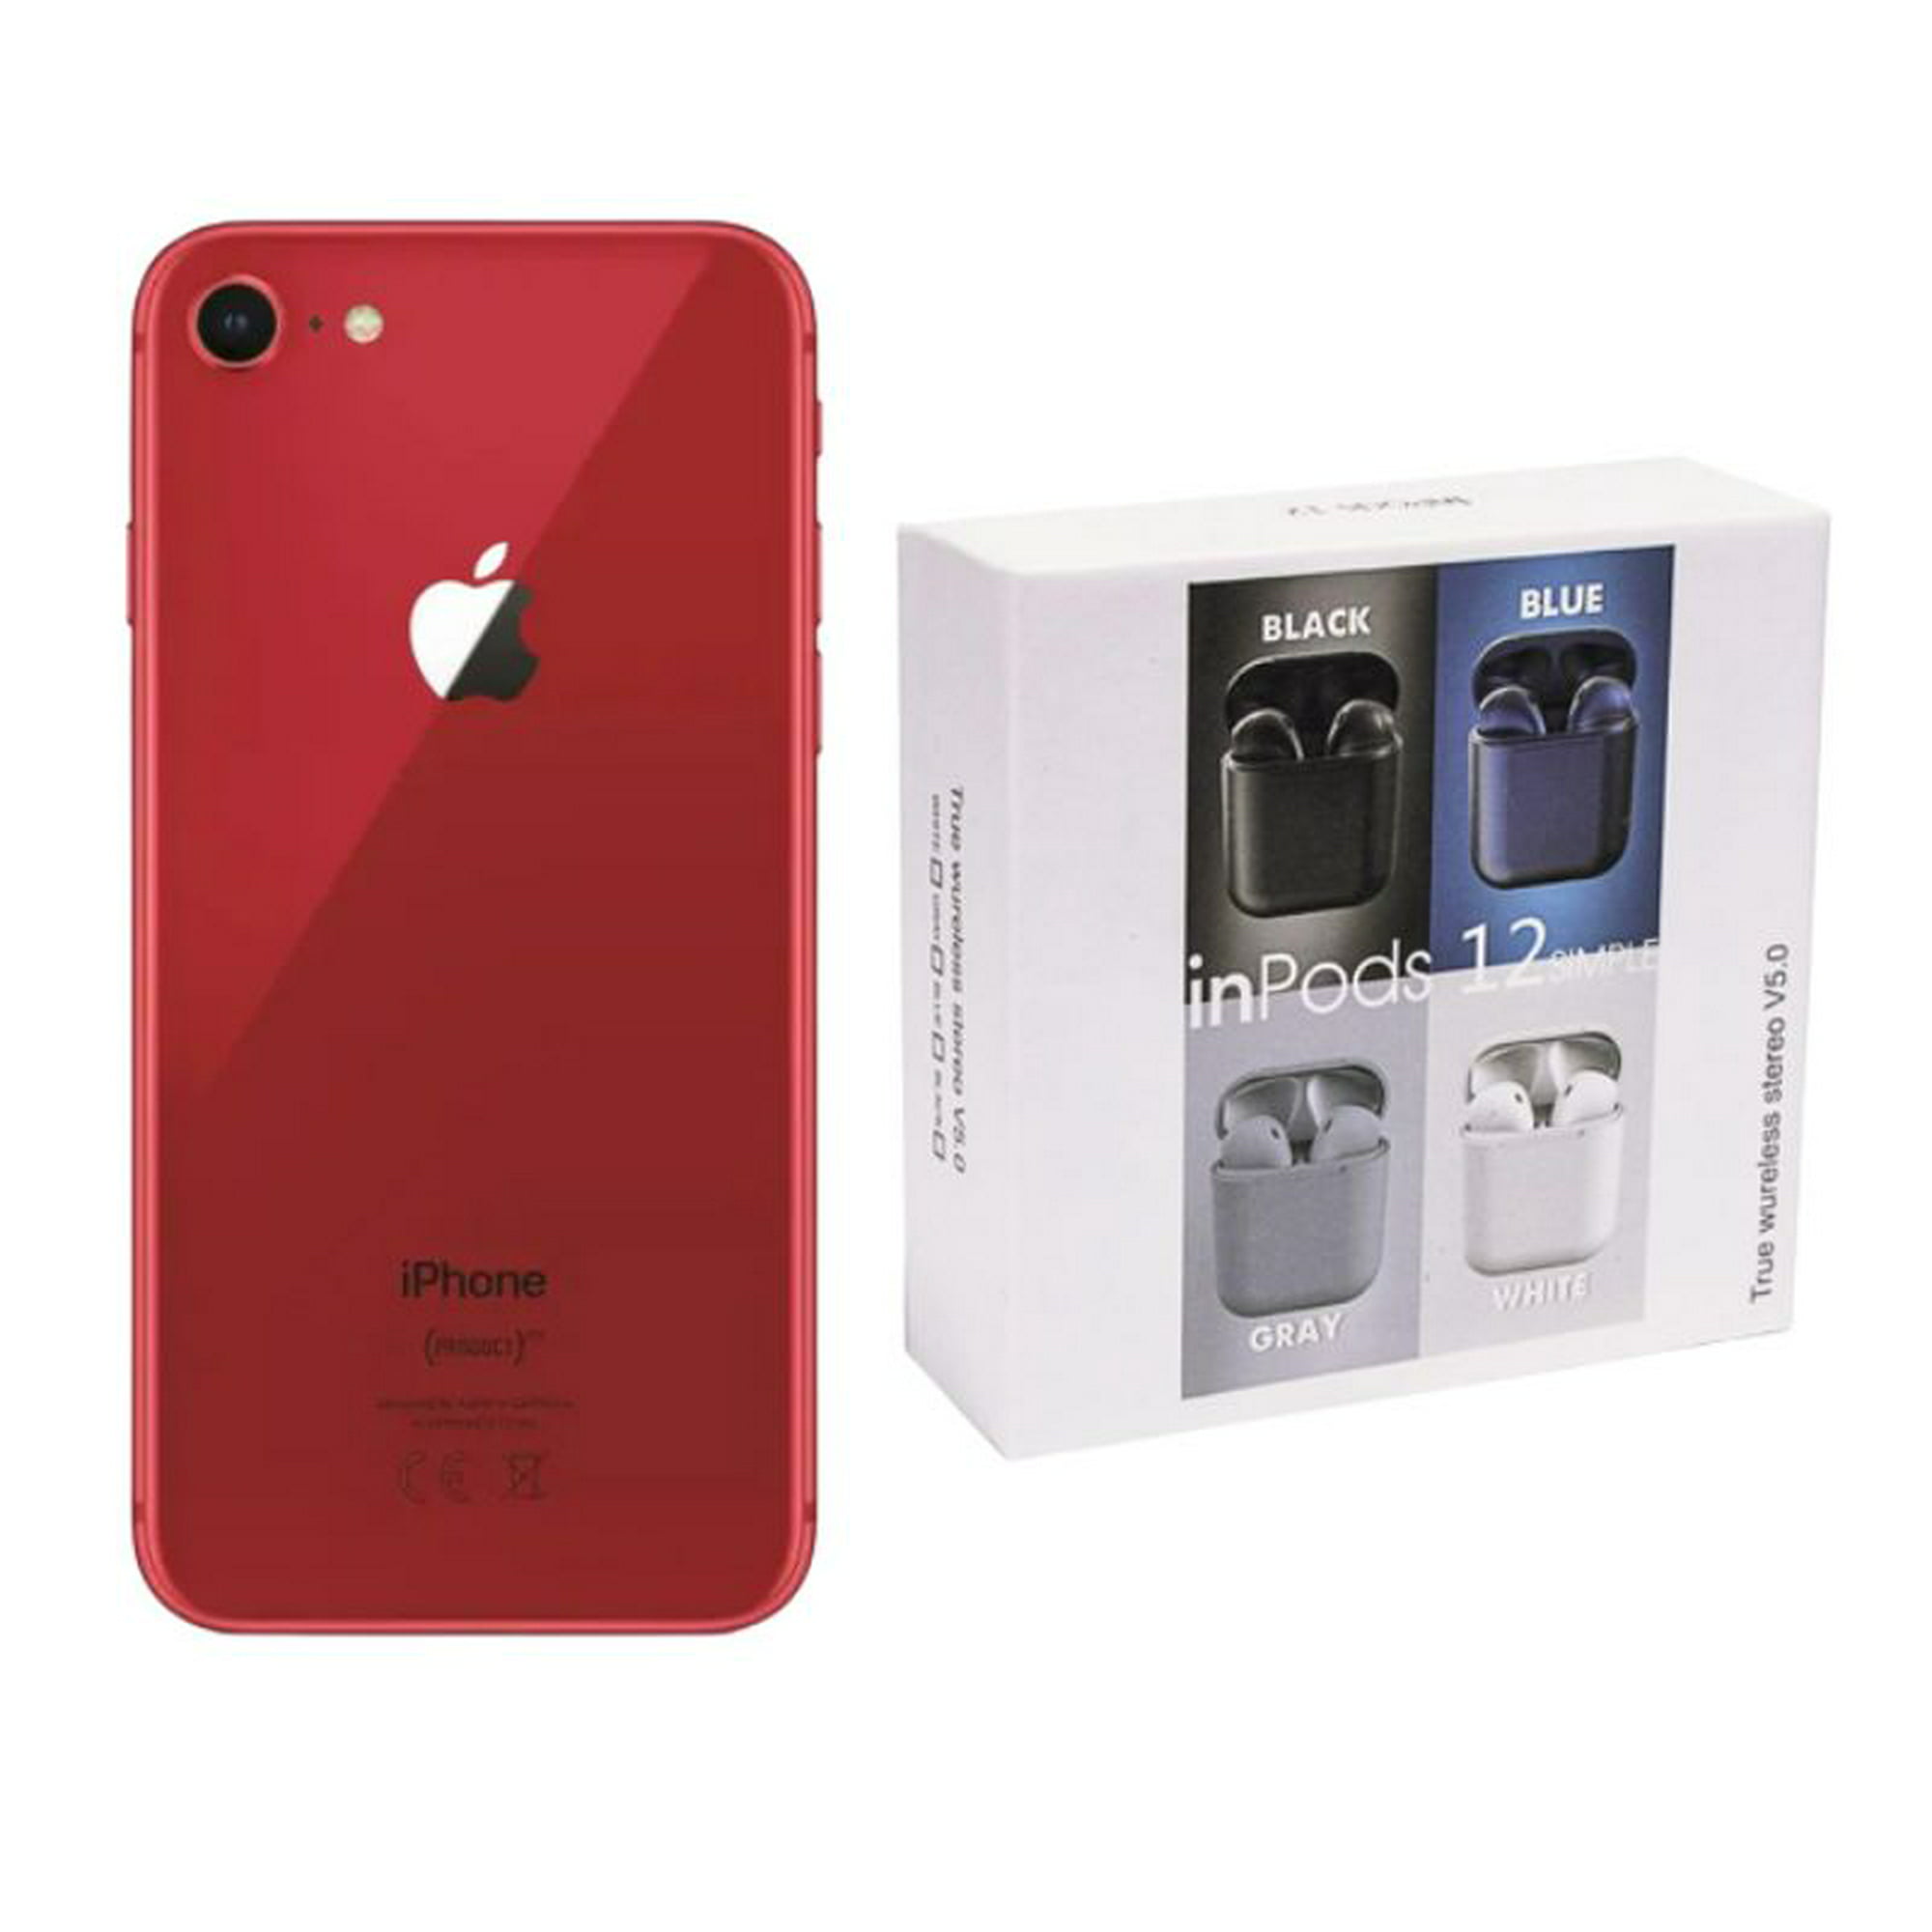 Celular APPLE iPhone SE 64GB 4.7 HD 12MP Rojo + Audifonos Reacondicionado